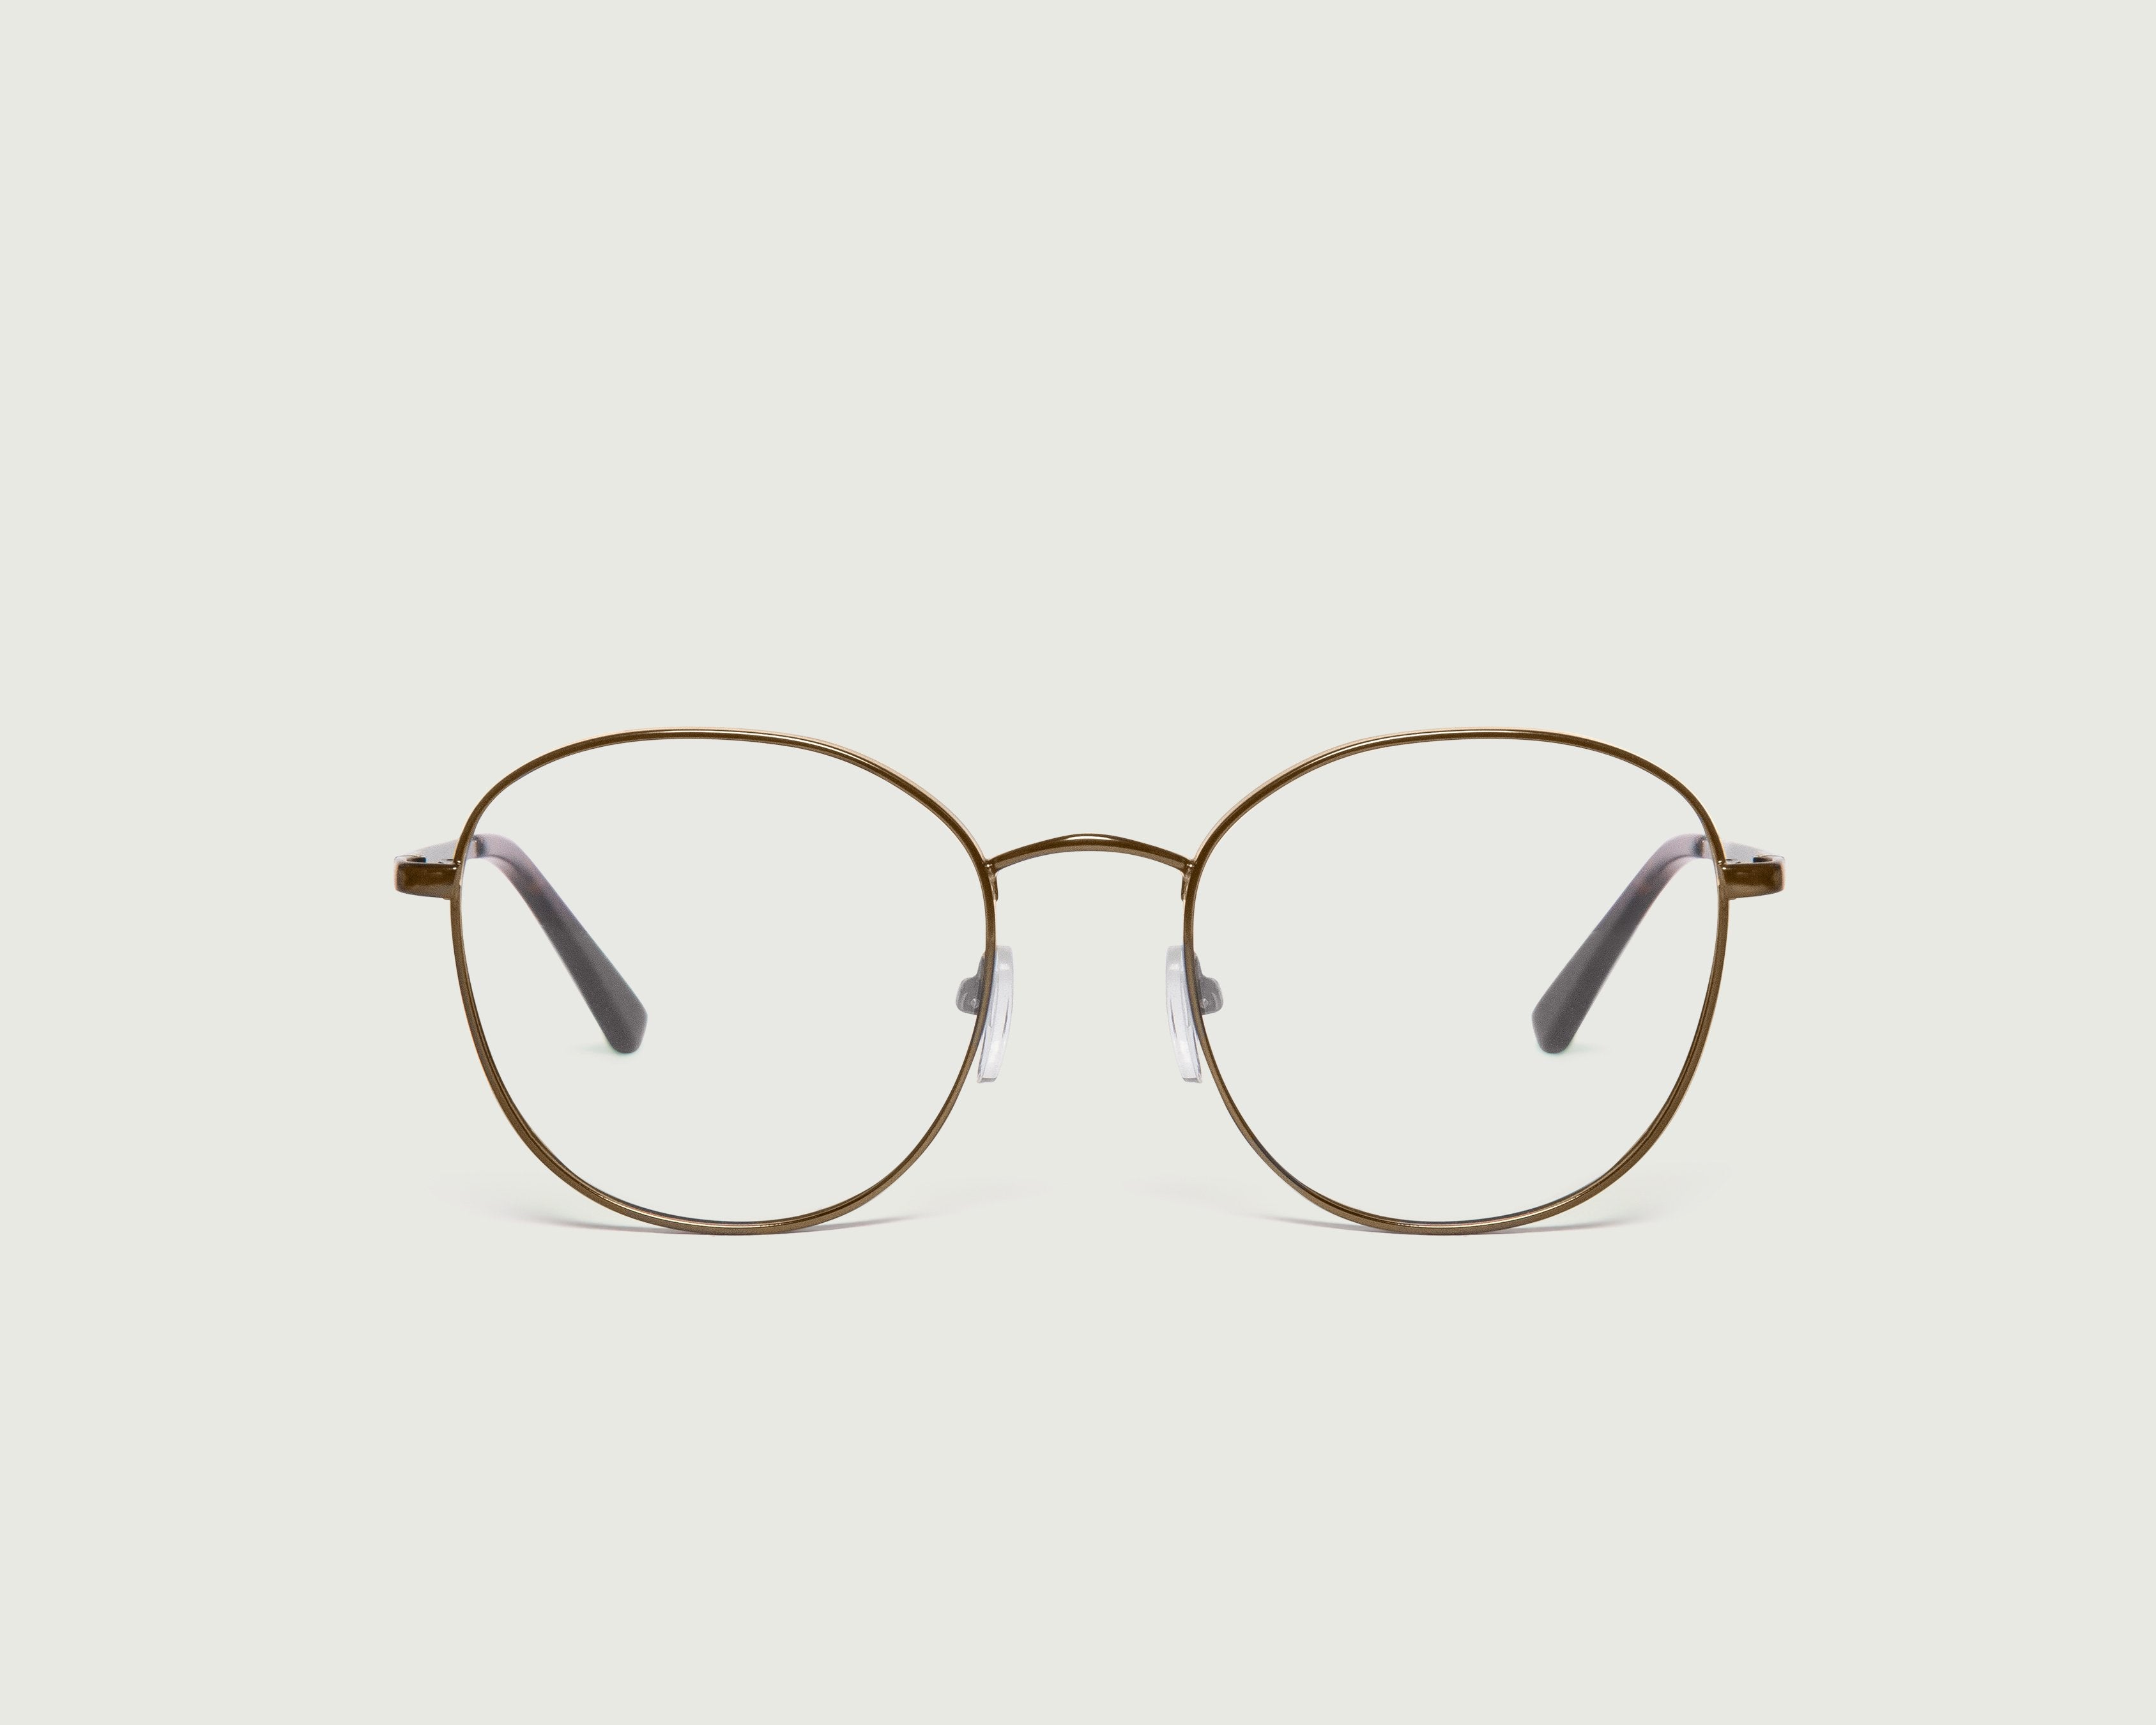 Rye::Abbot Eyeglasses round brown metal front